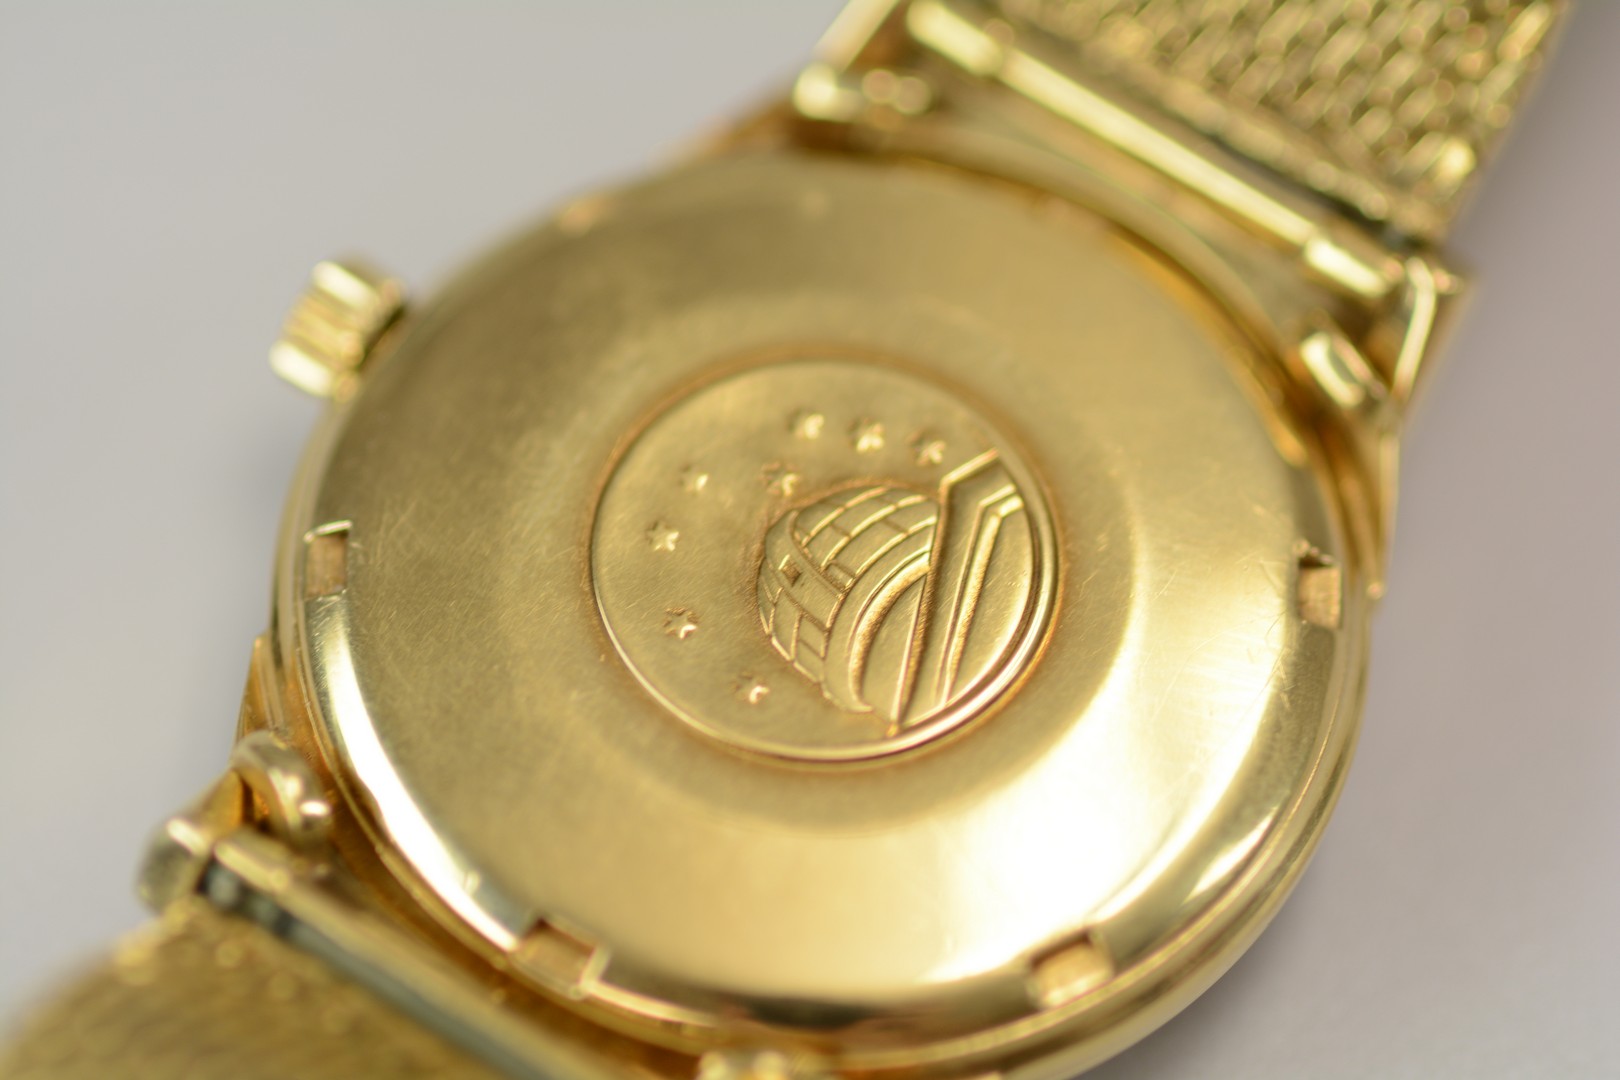 Omega / Constellation - Chronometer - Gentlmen's Yellow gold Wrist Watch - Image 6 of 8